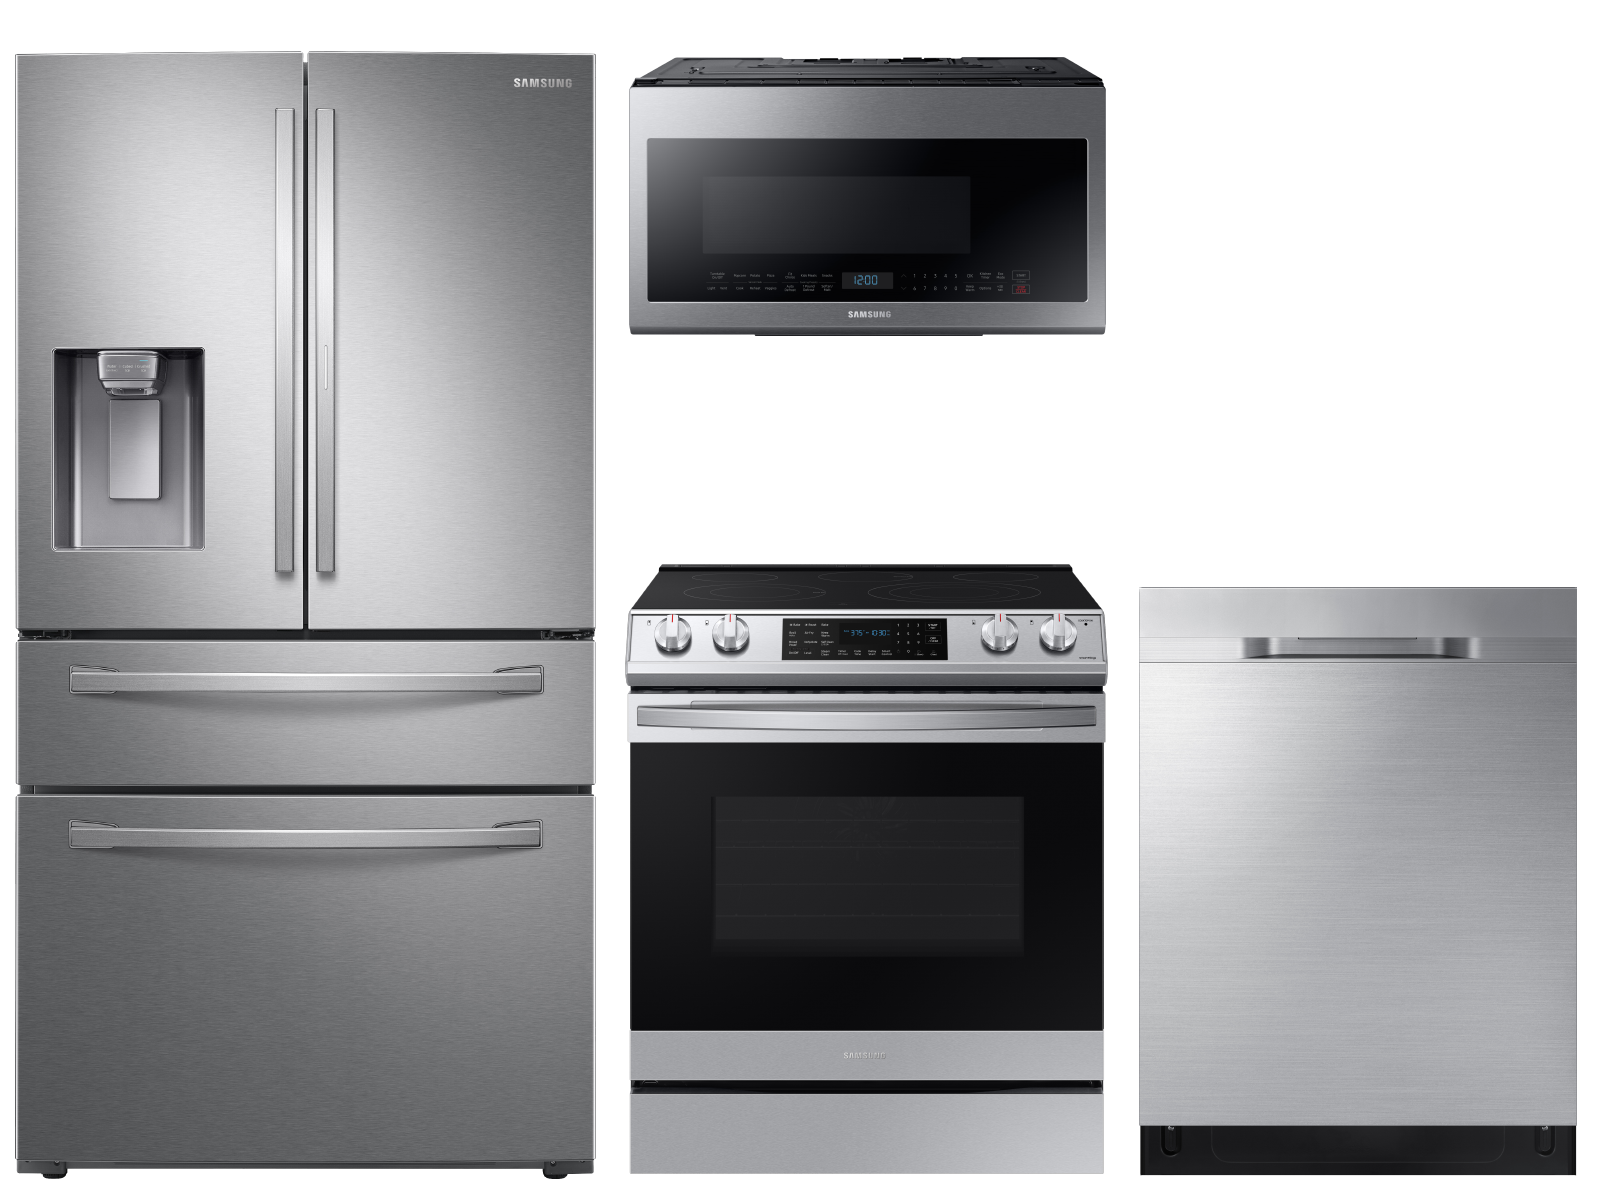 Food Showcase 4-Door Refrigerator + Slide-in Electric Range with Air Fry +  StormWash™ Dishwasher + Microwave in Stainless Steel